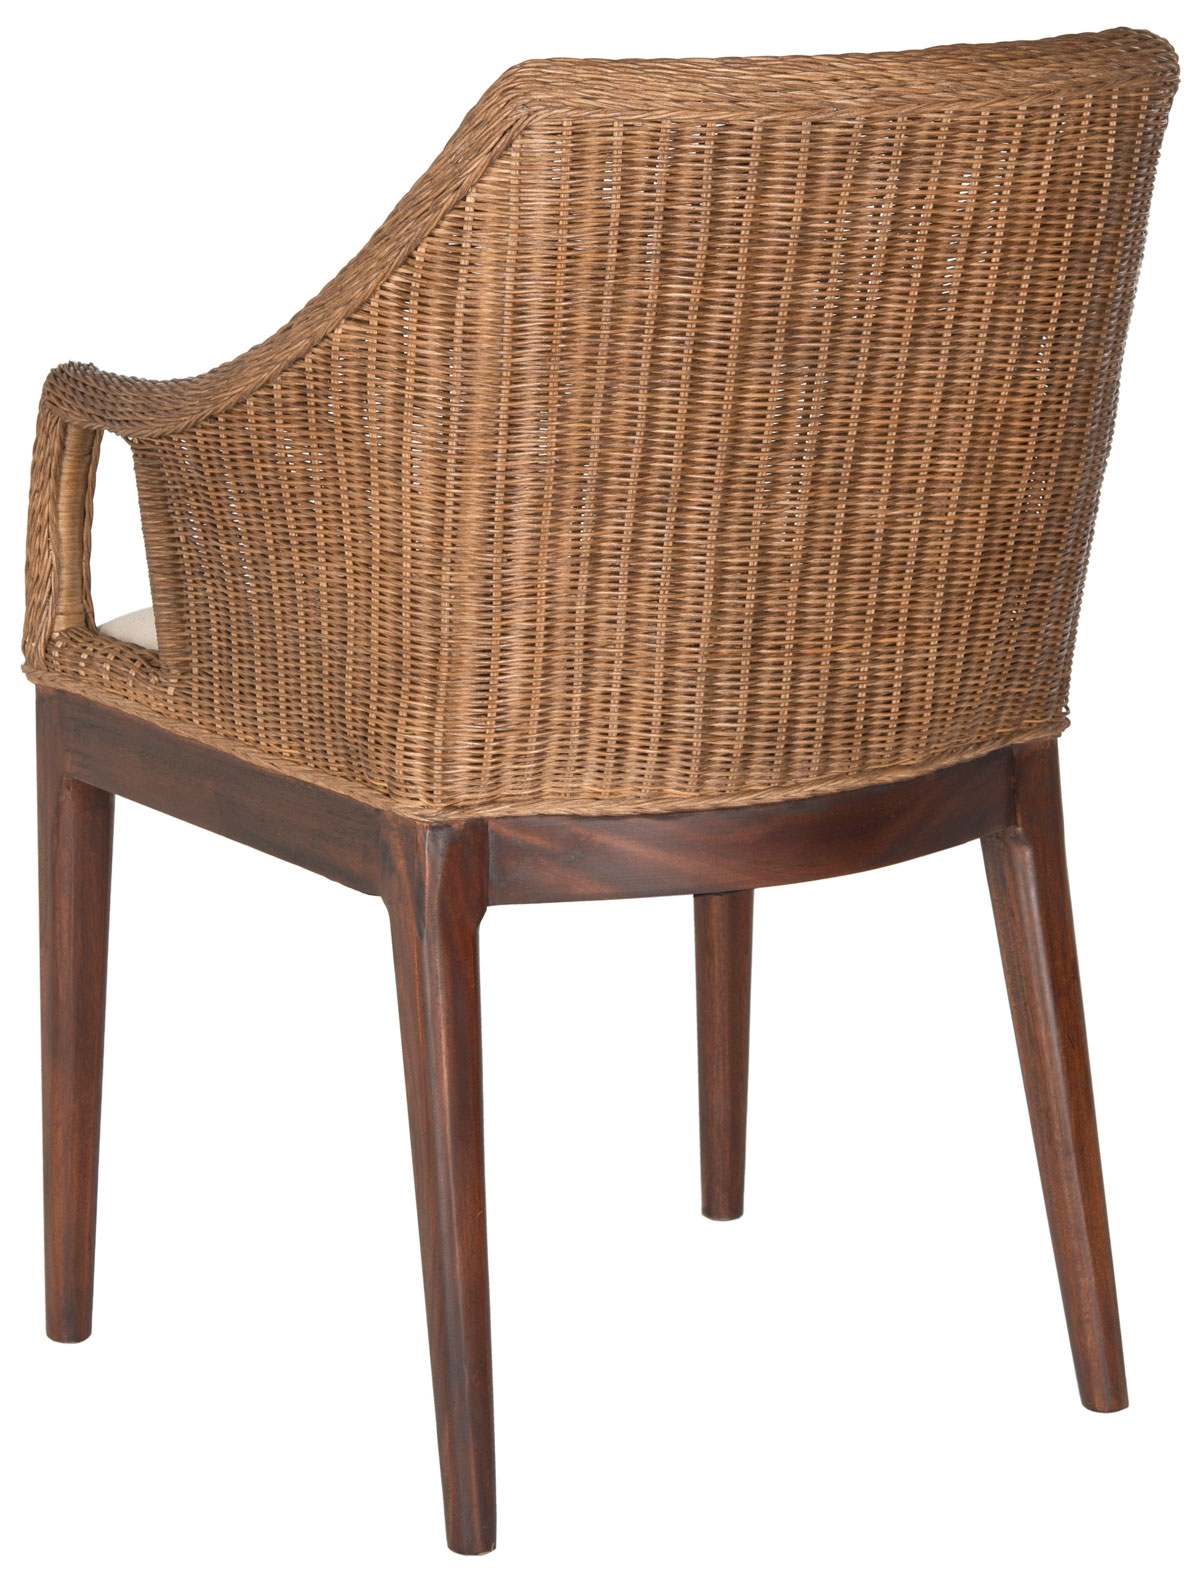 Enrico Arm Chair - Multi Brown - Safavieh - Image 2